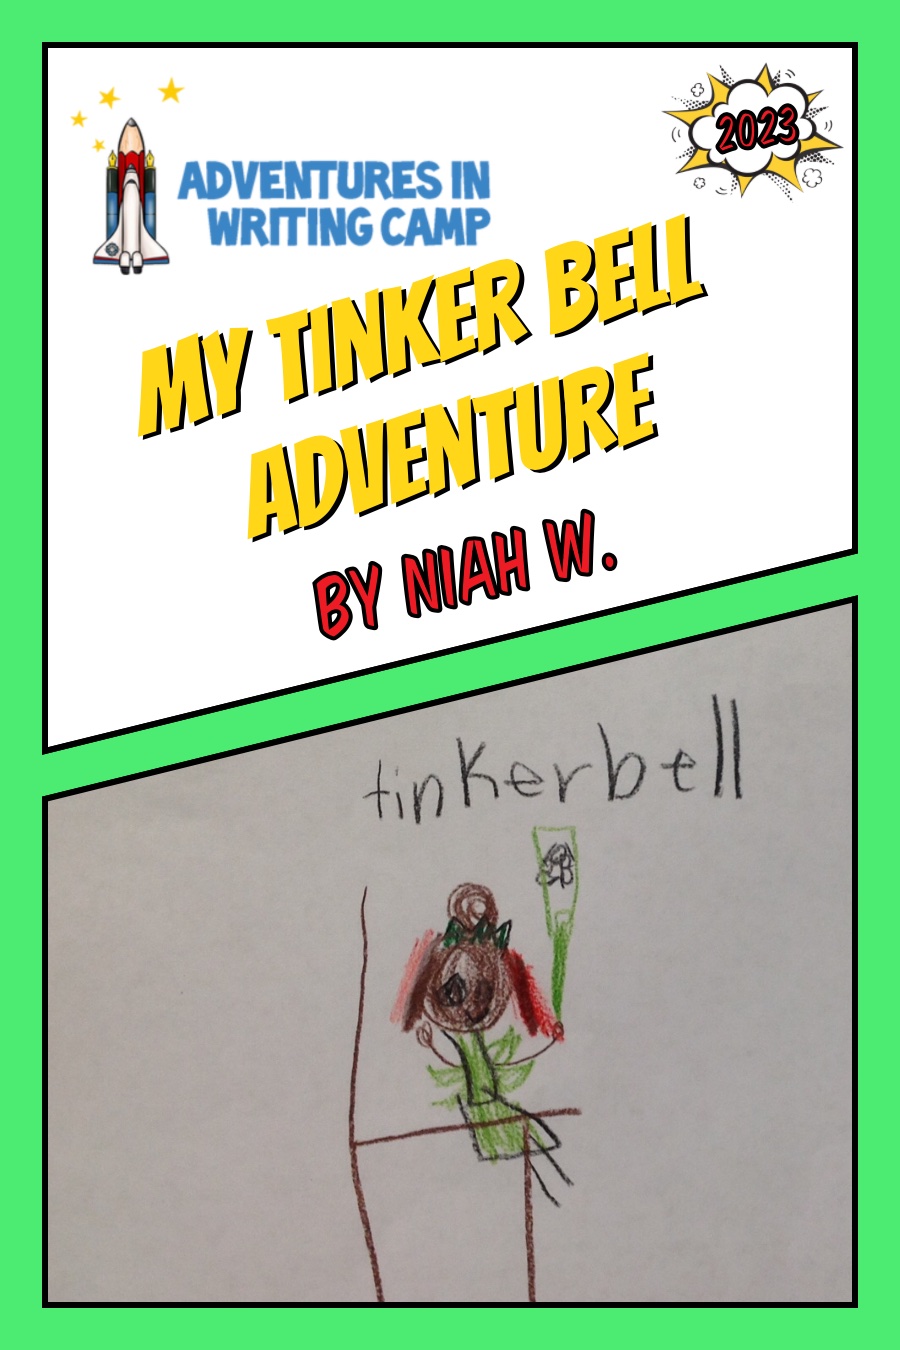 My Tinker Bell Adventure by Niah W